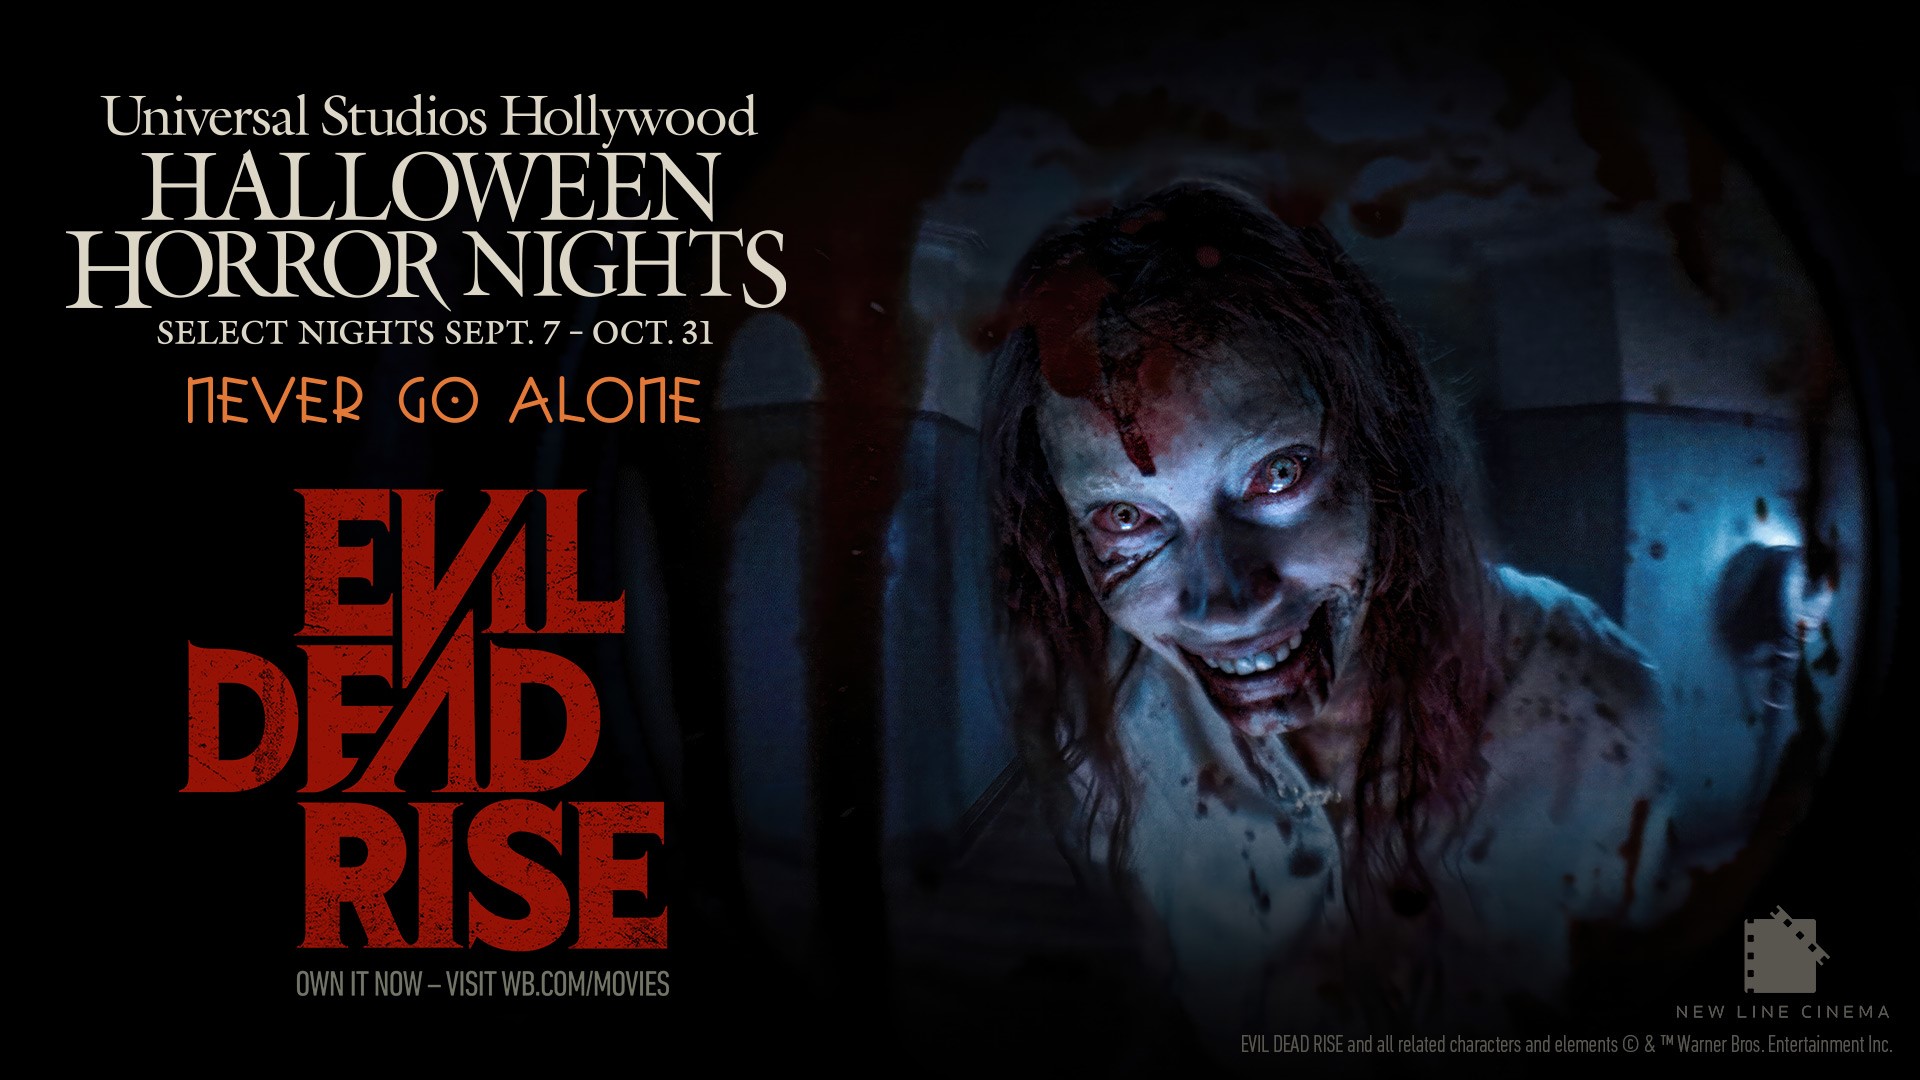 Universal Studios Hollywood Horror Nights